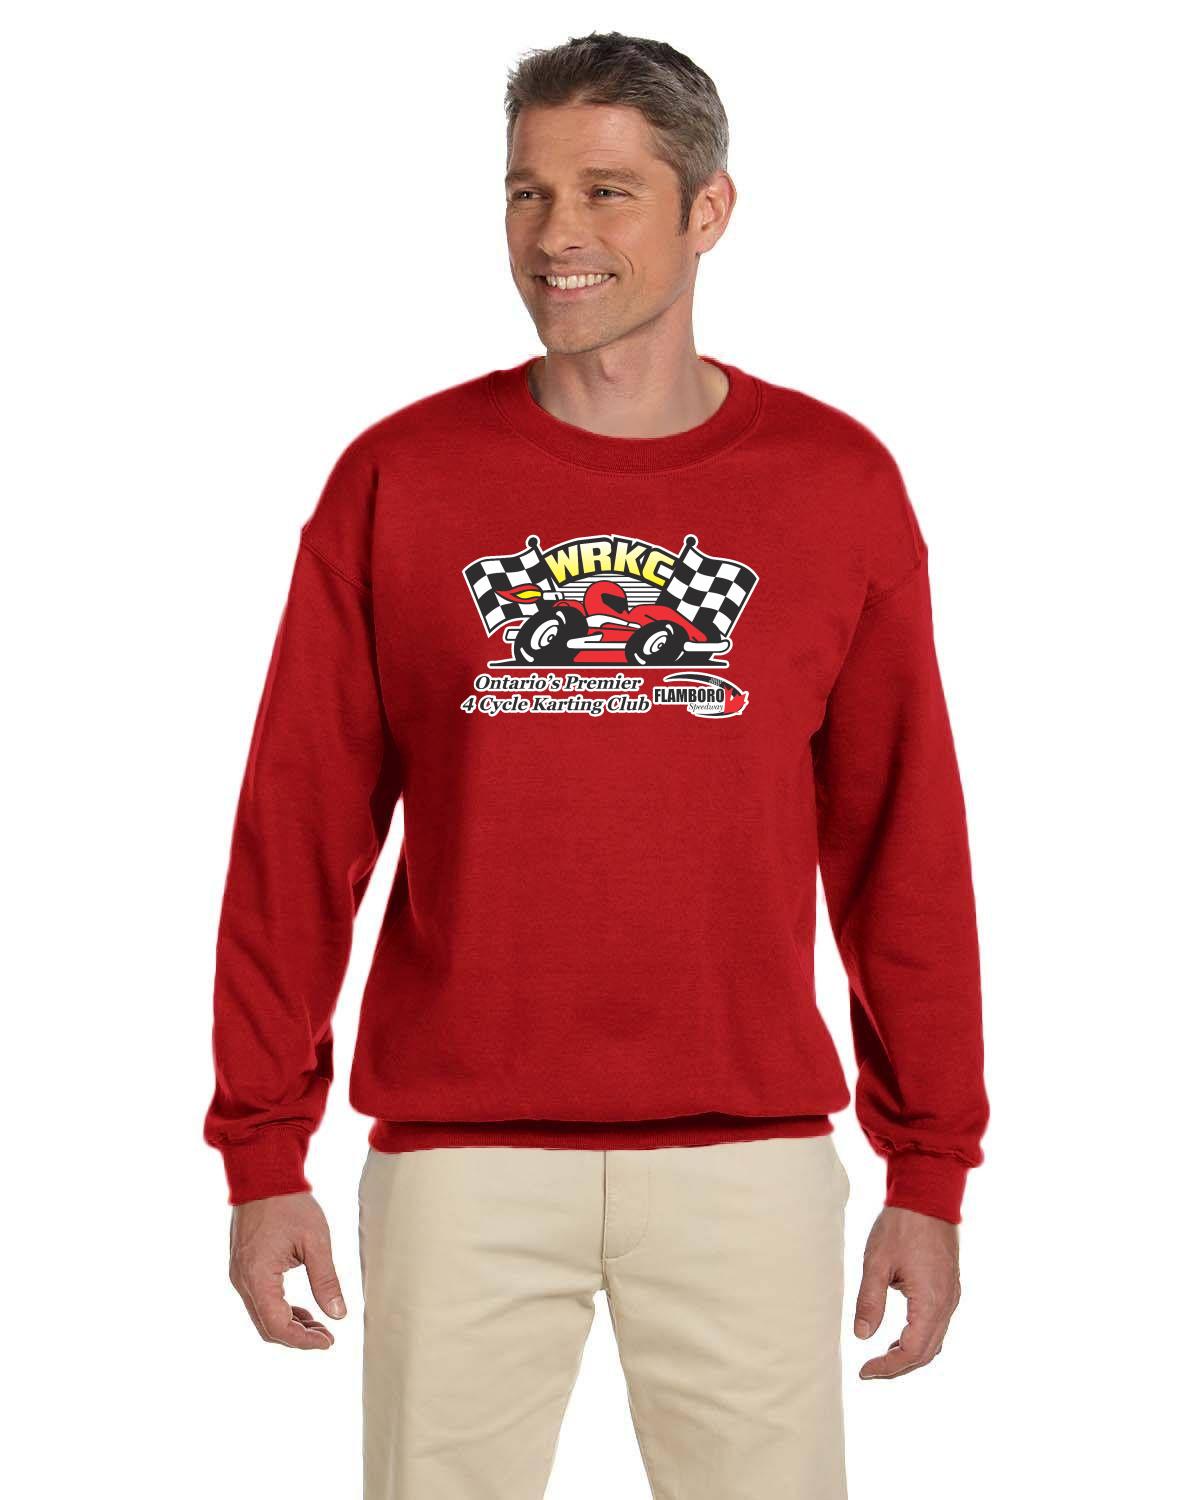 WRKC Karting Club Adult Crew Neck sweater